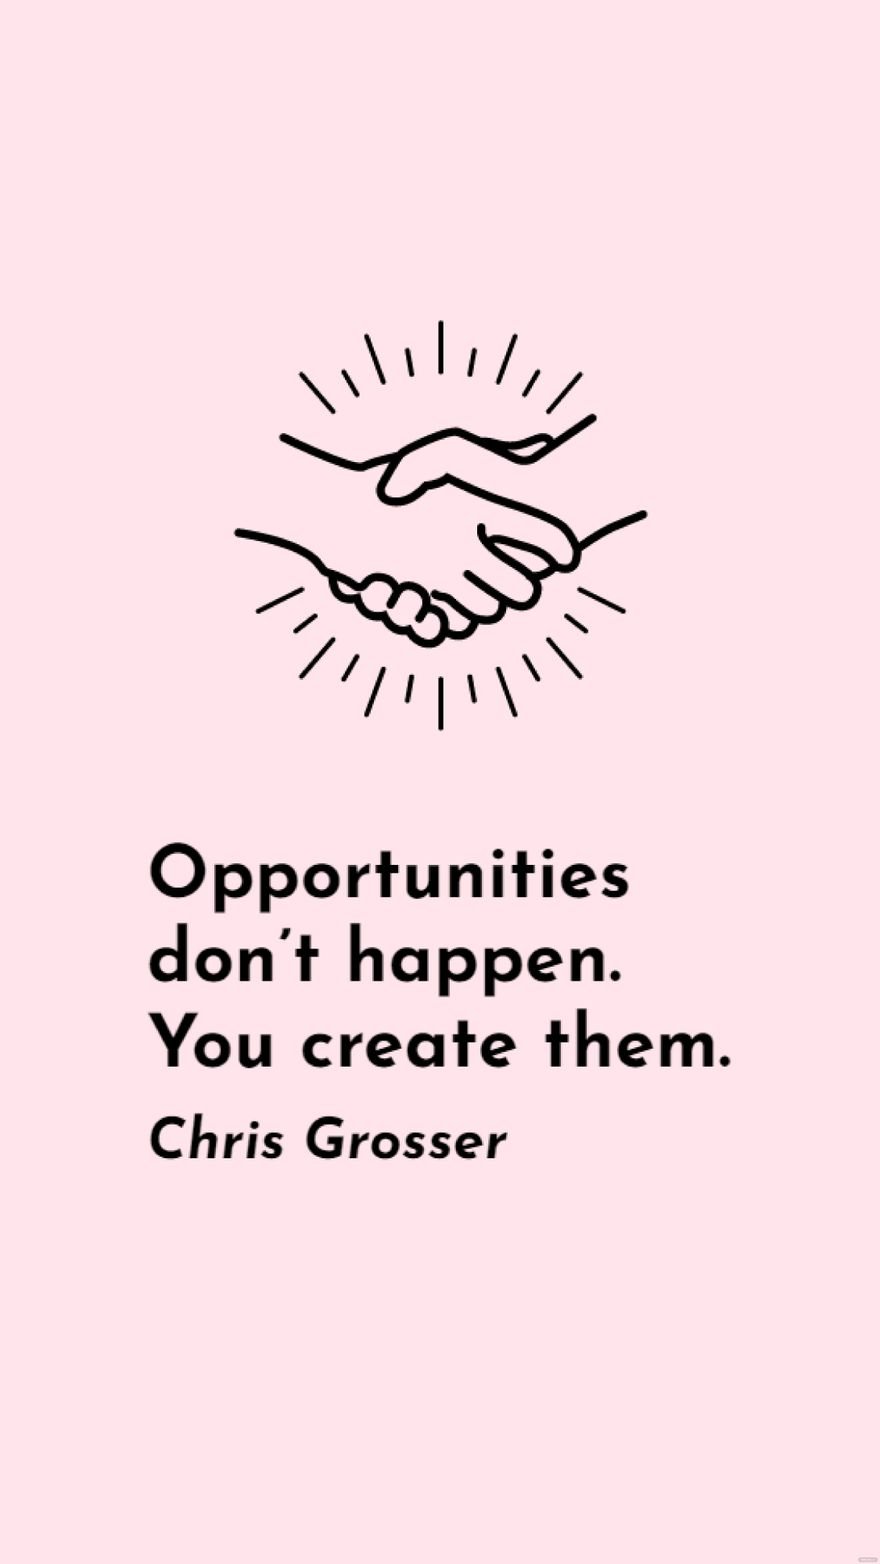 Free Chris Grosser - Opportunities don’t happen. You create them. in JPG